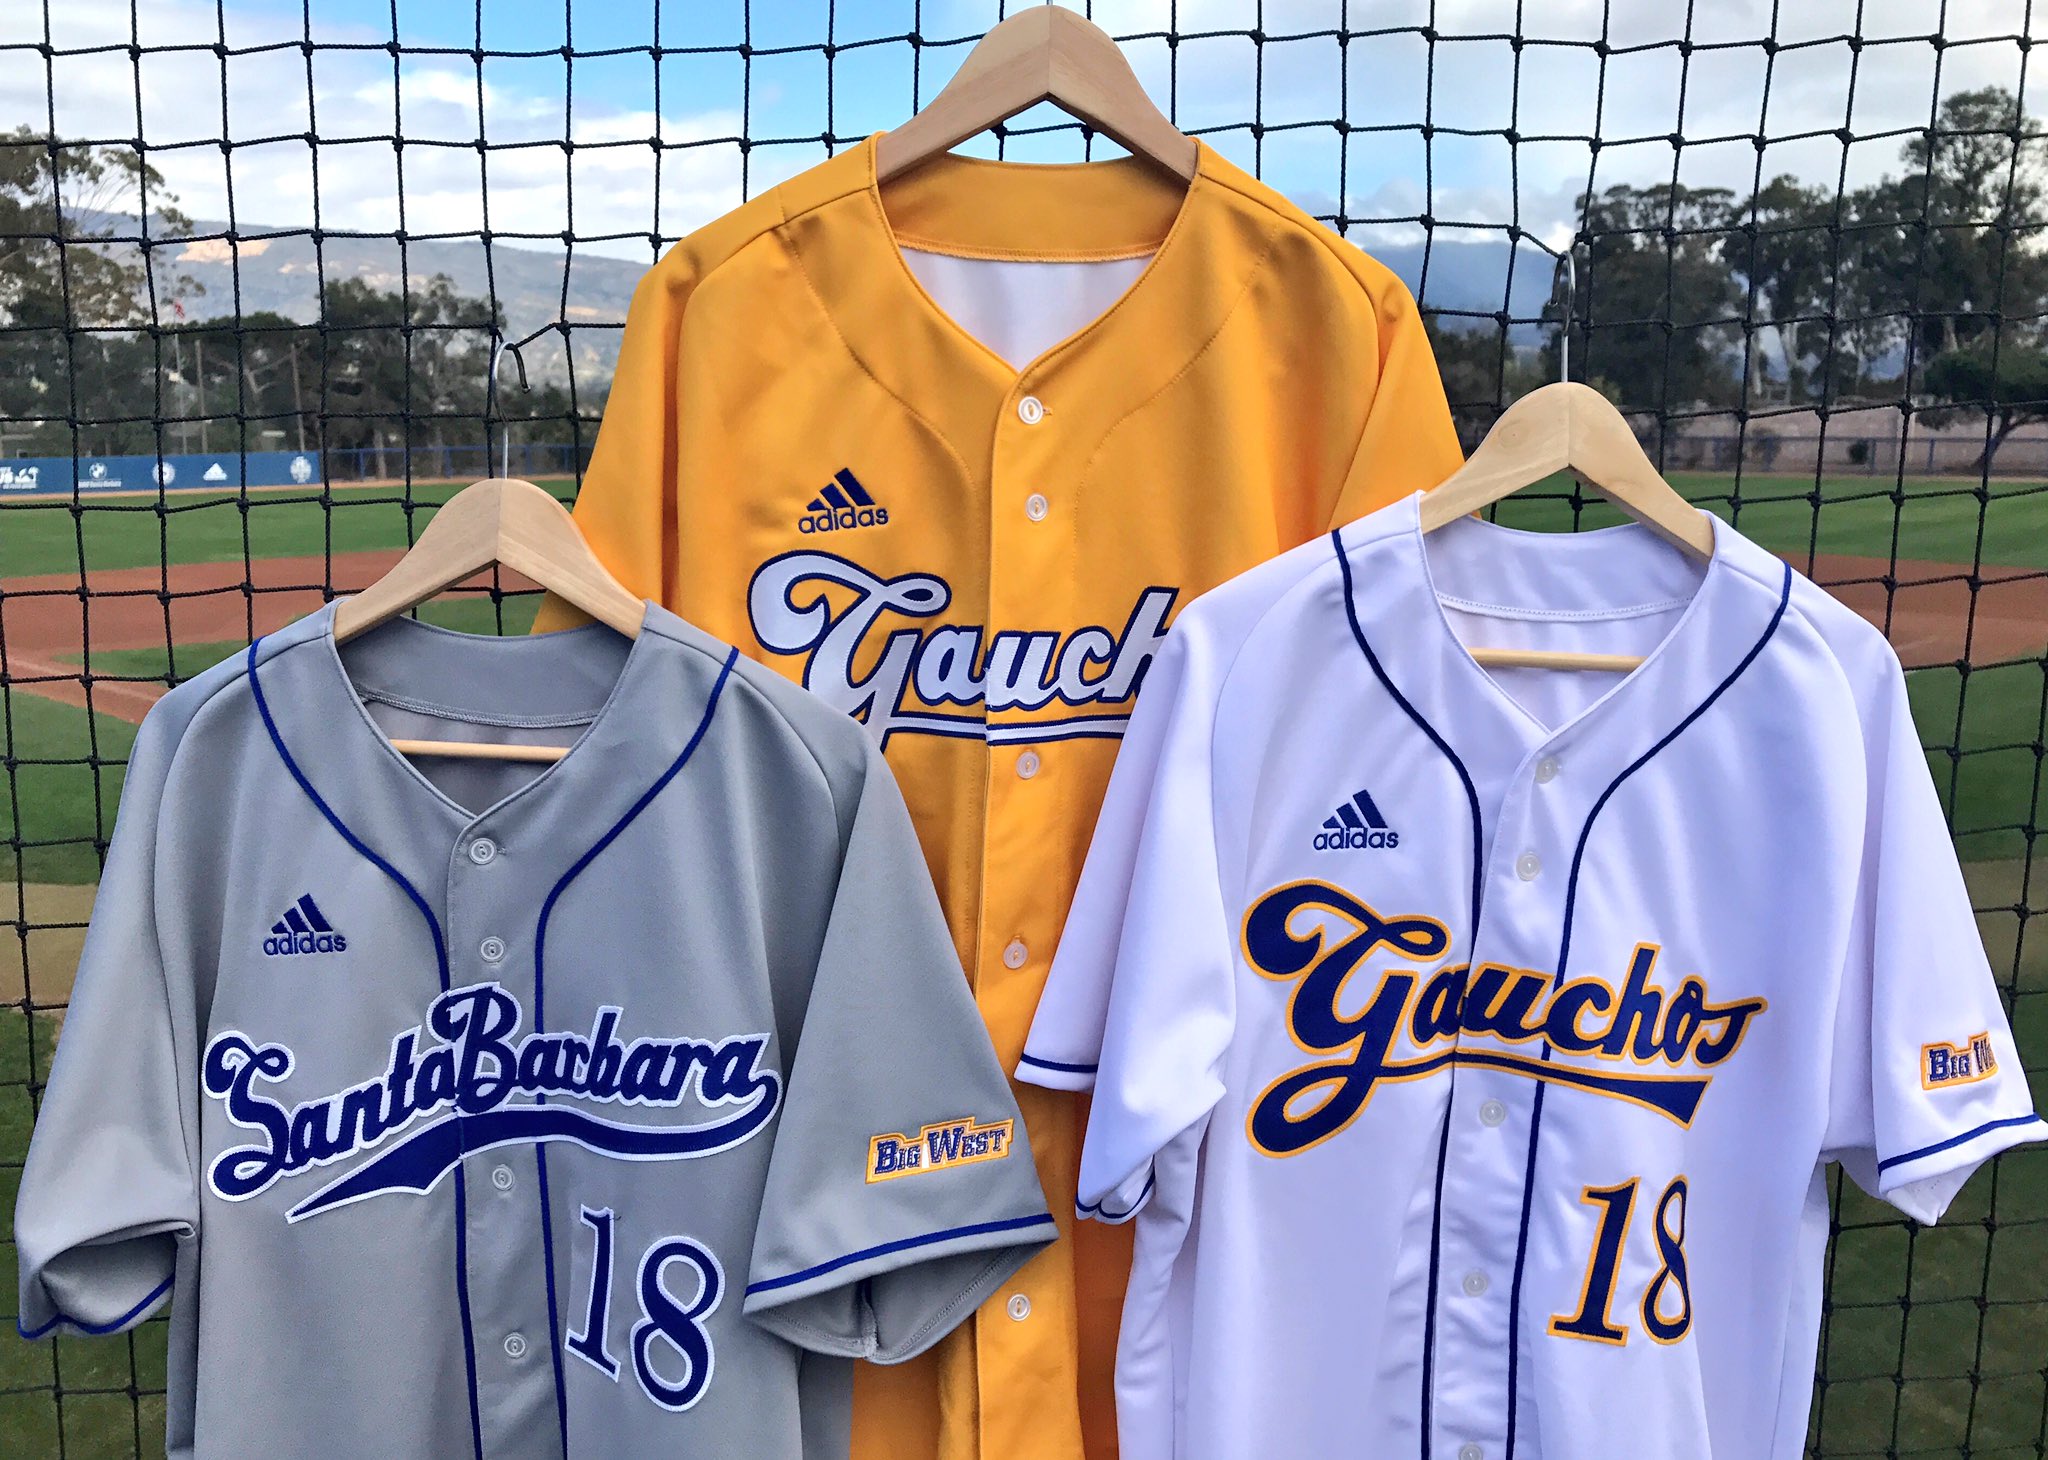 UC Santa Barbara Gauchos baseball away jersey